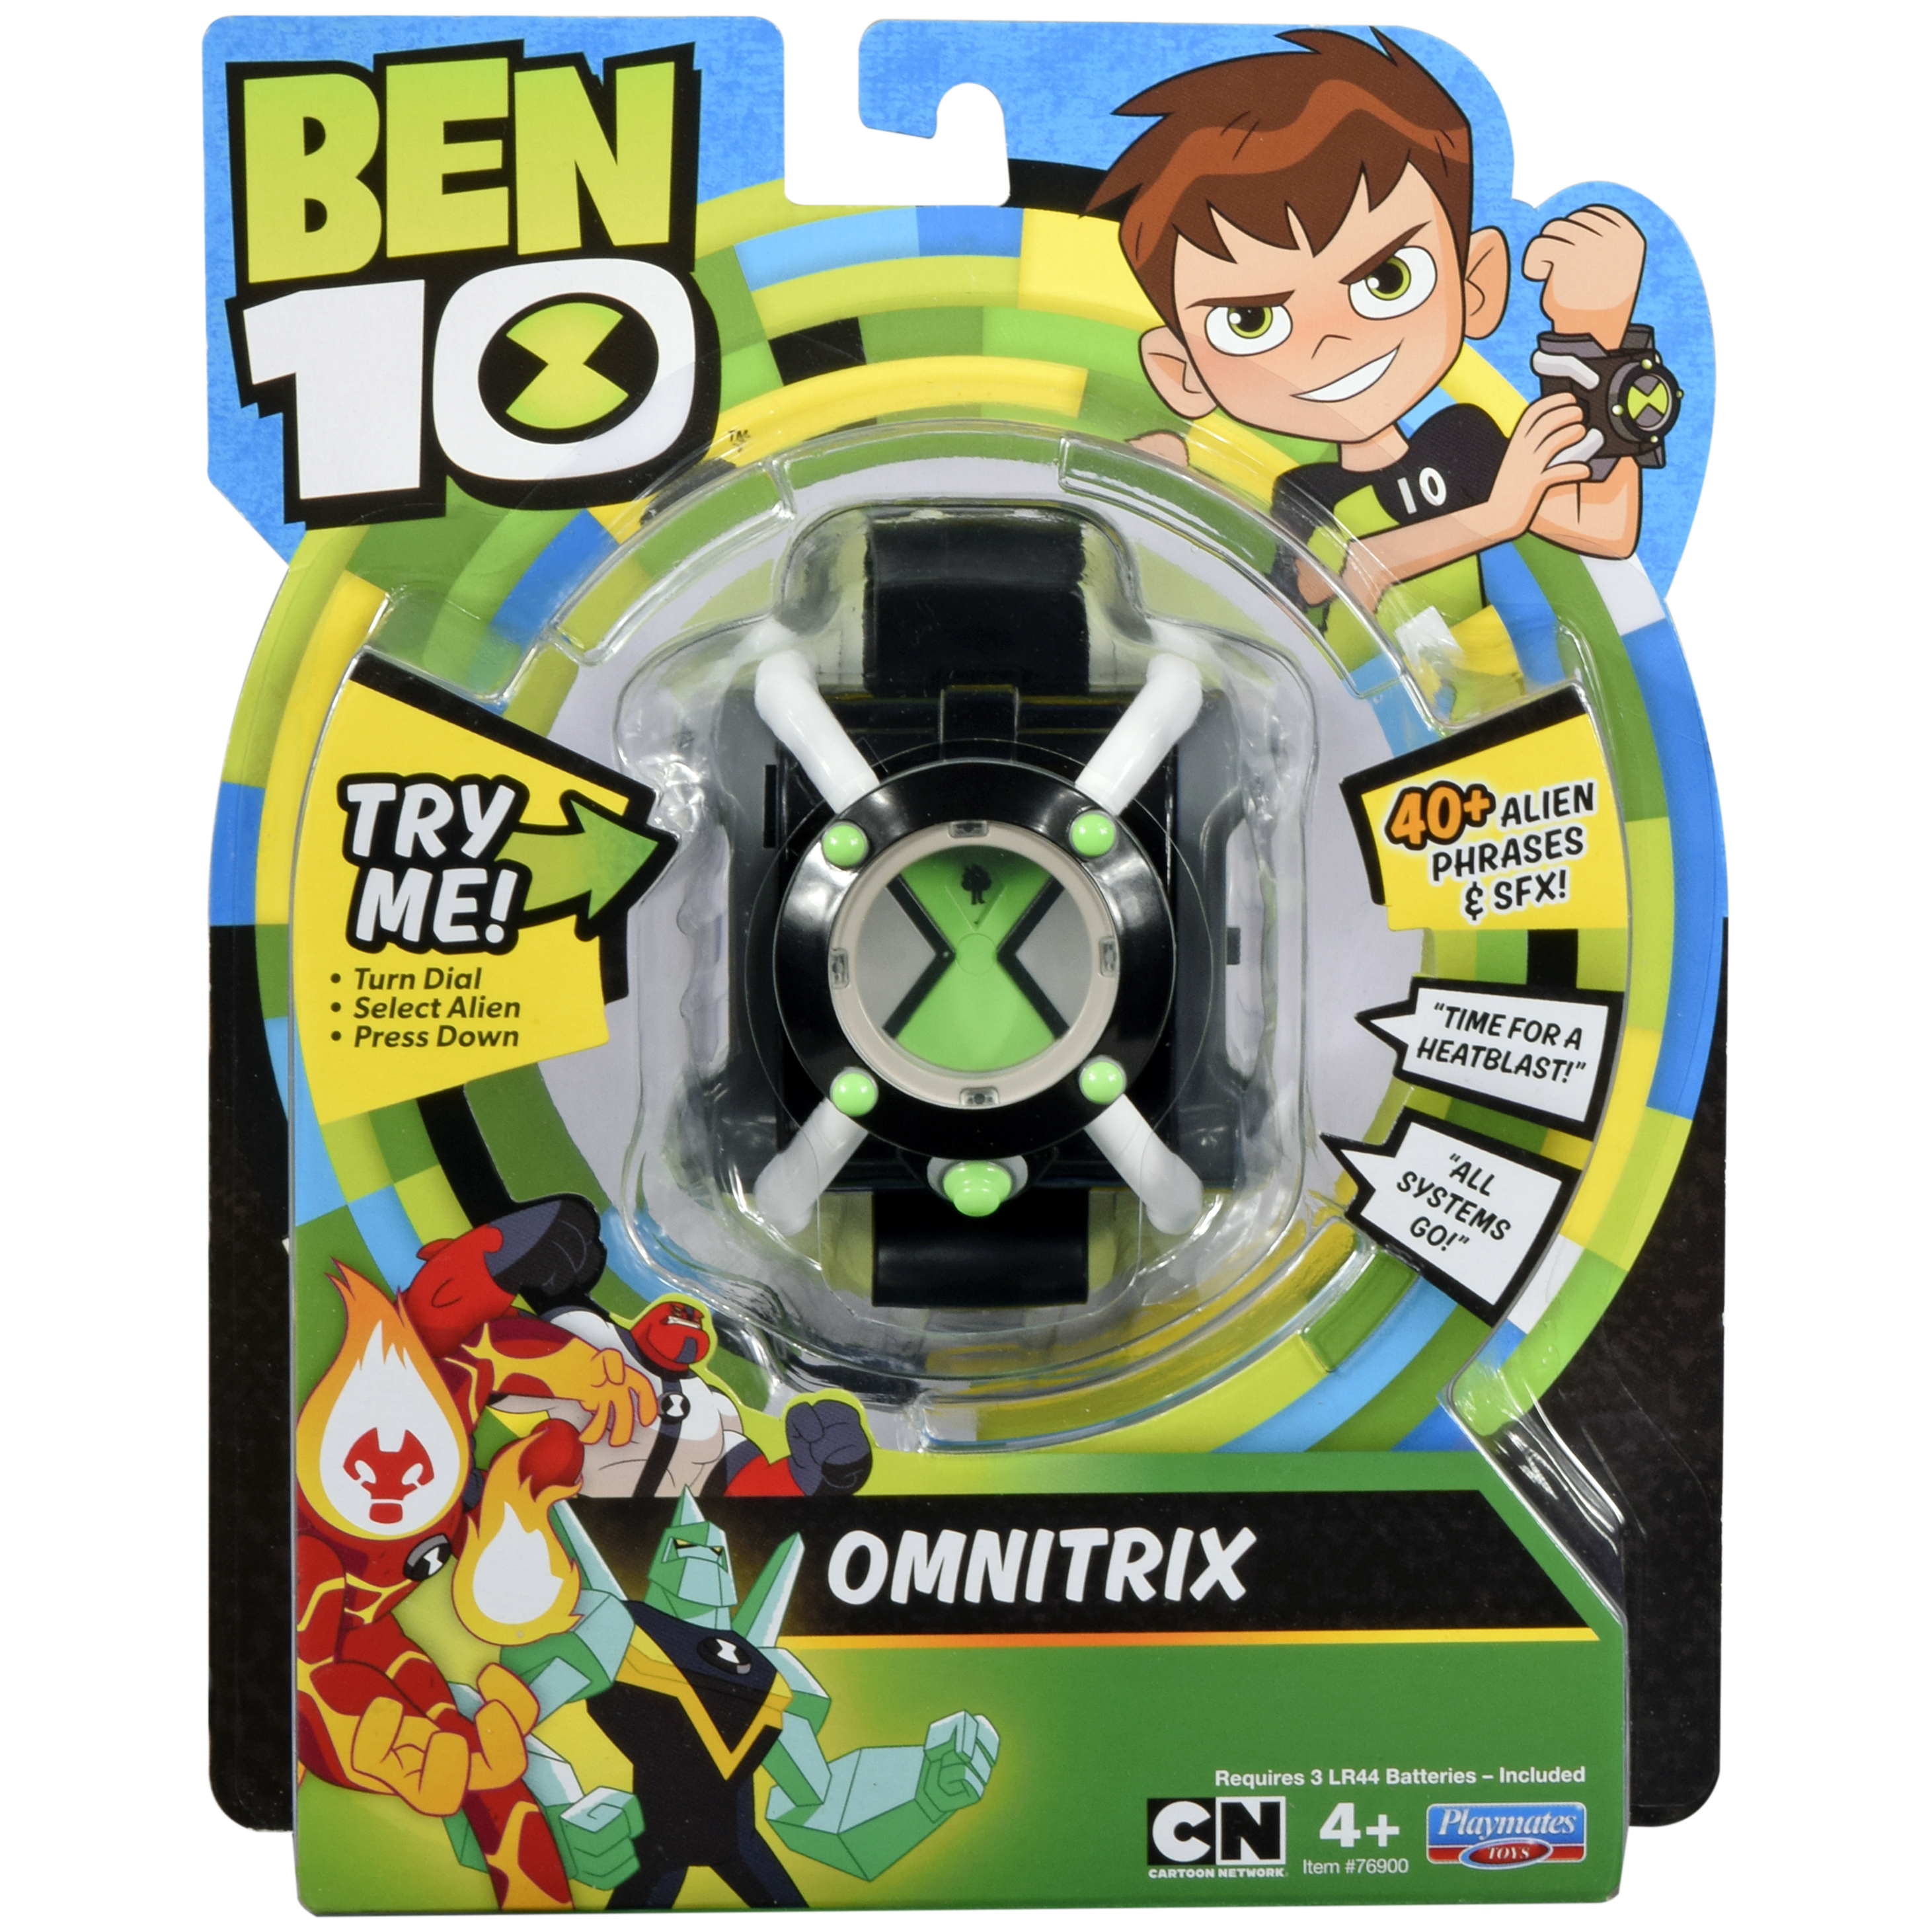 Ben 10, Every Omnitrix hit of Season 1